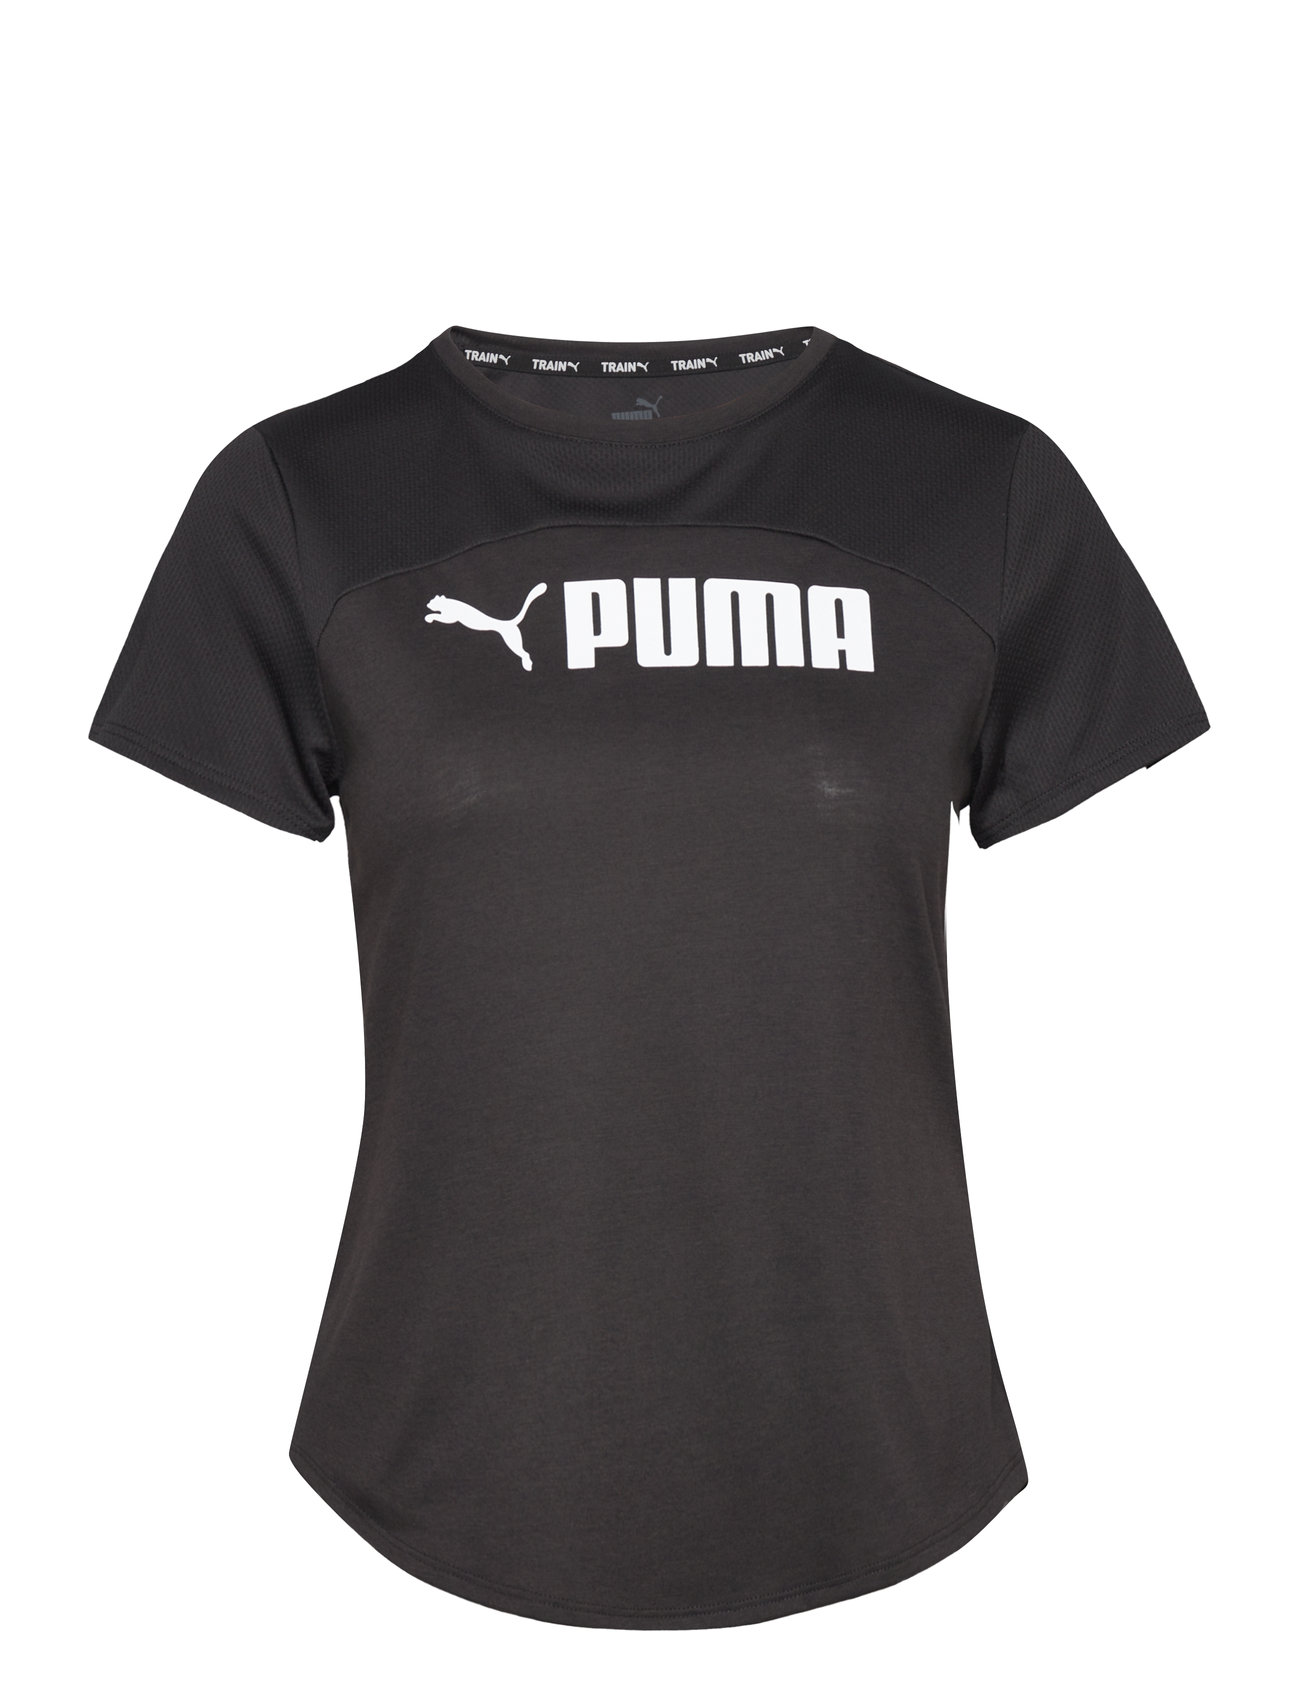 PUMA Puma Fit tops Tee t-shirts verslaðu – Booztlet – Logo á & Ultrabreathe